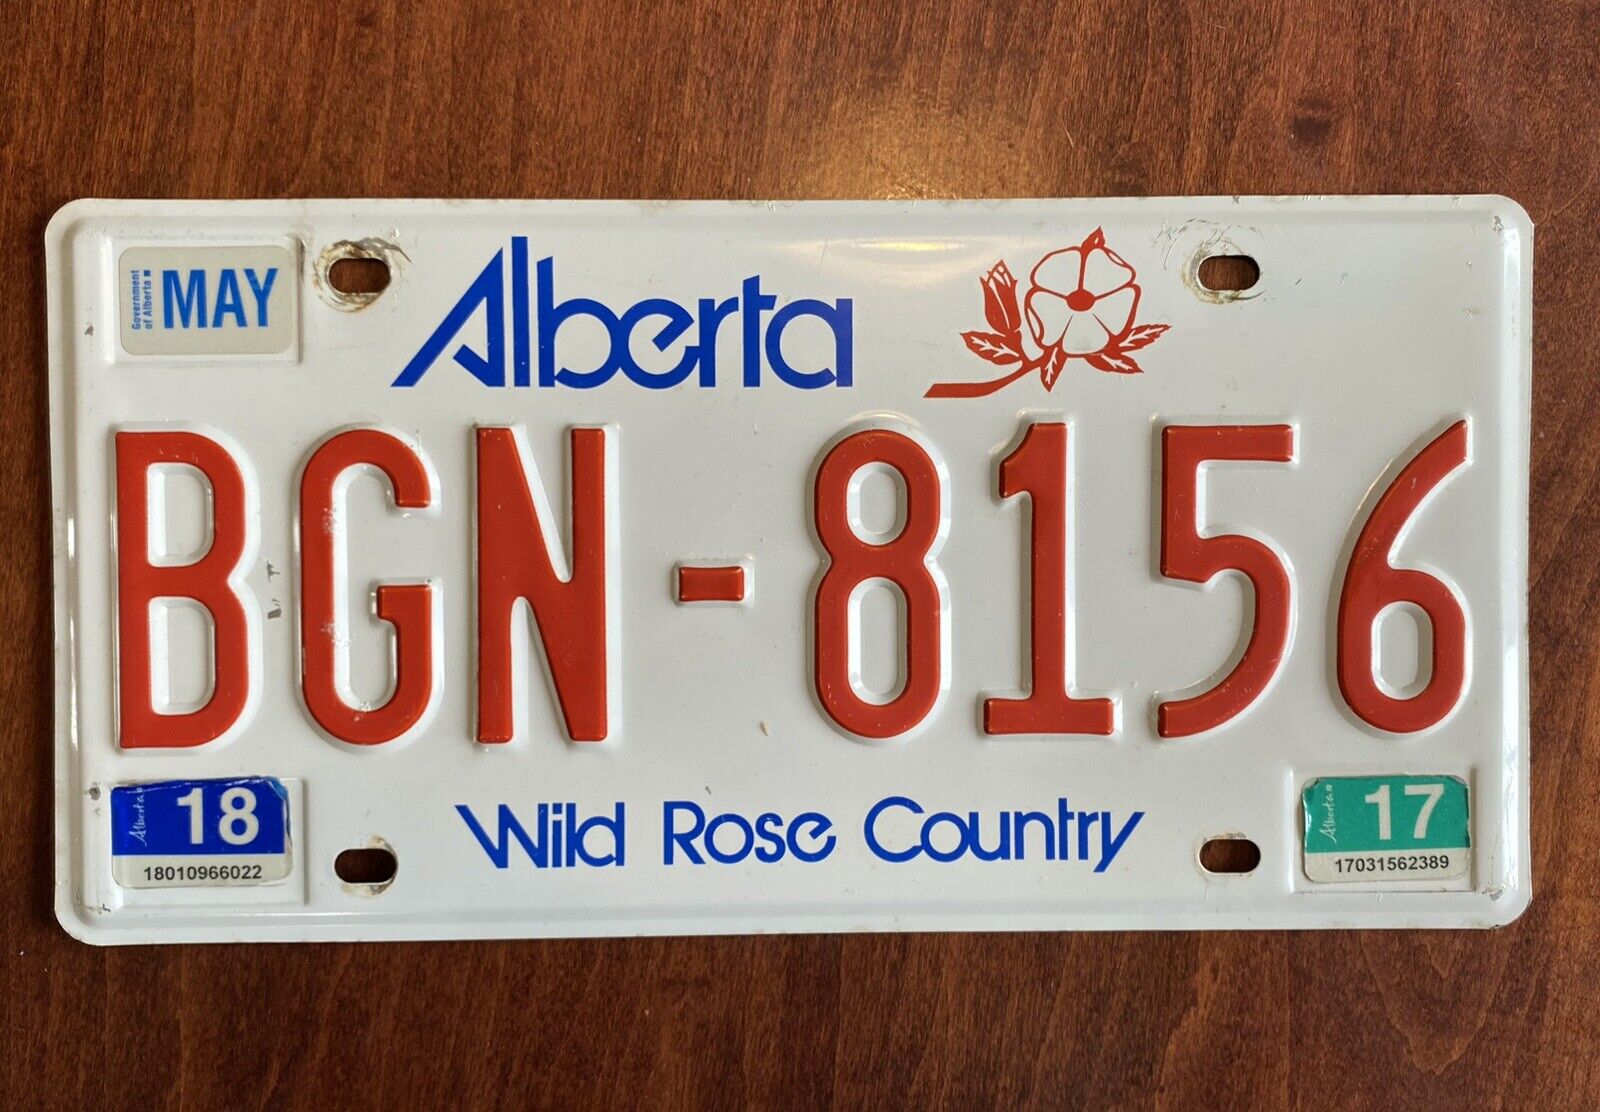 Alberta Canada Wild Rose Country License Plate, BGN-8156, 12” X 6”